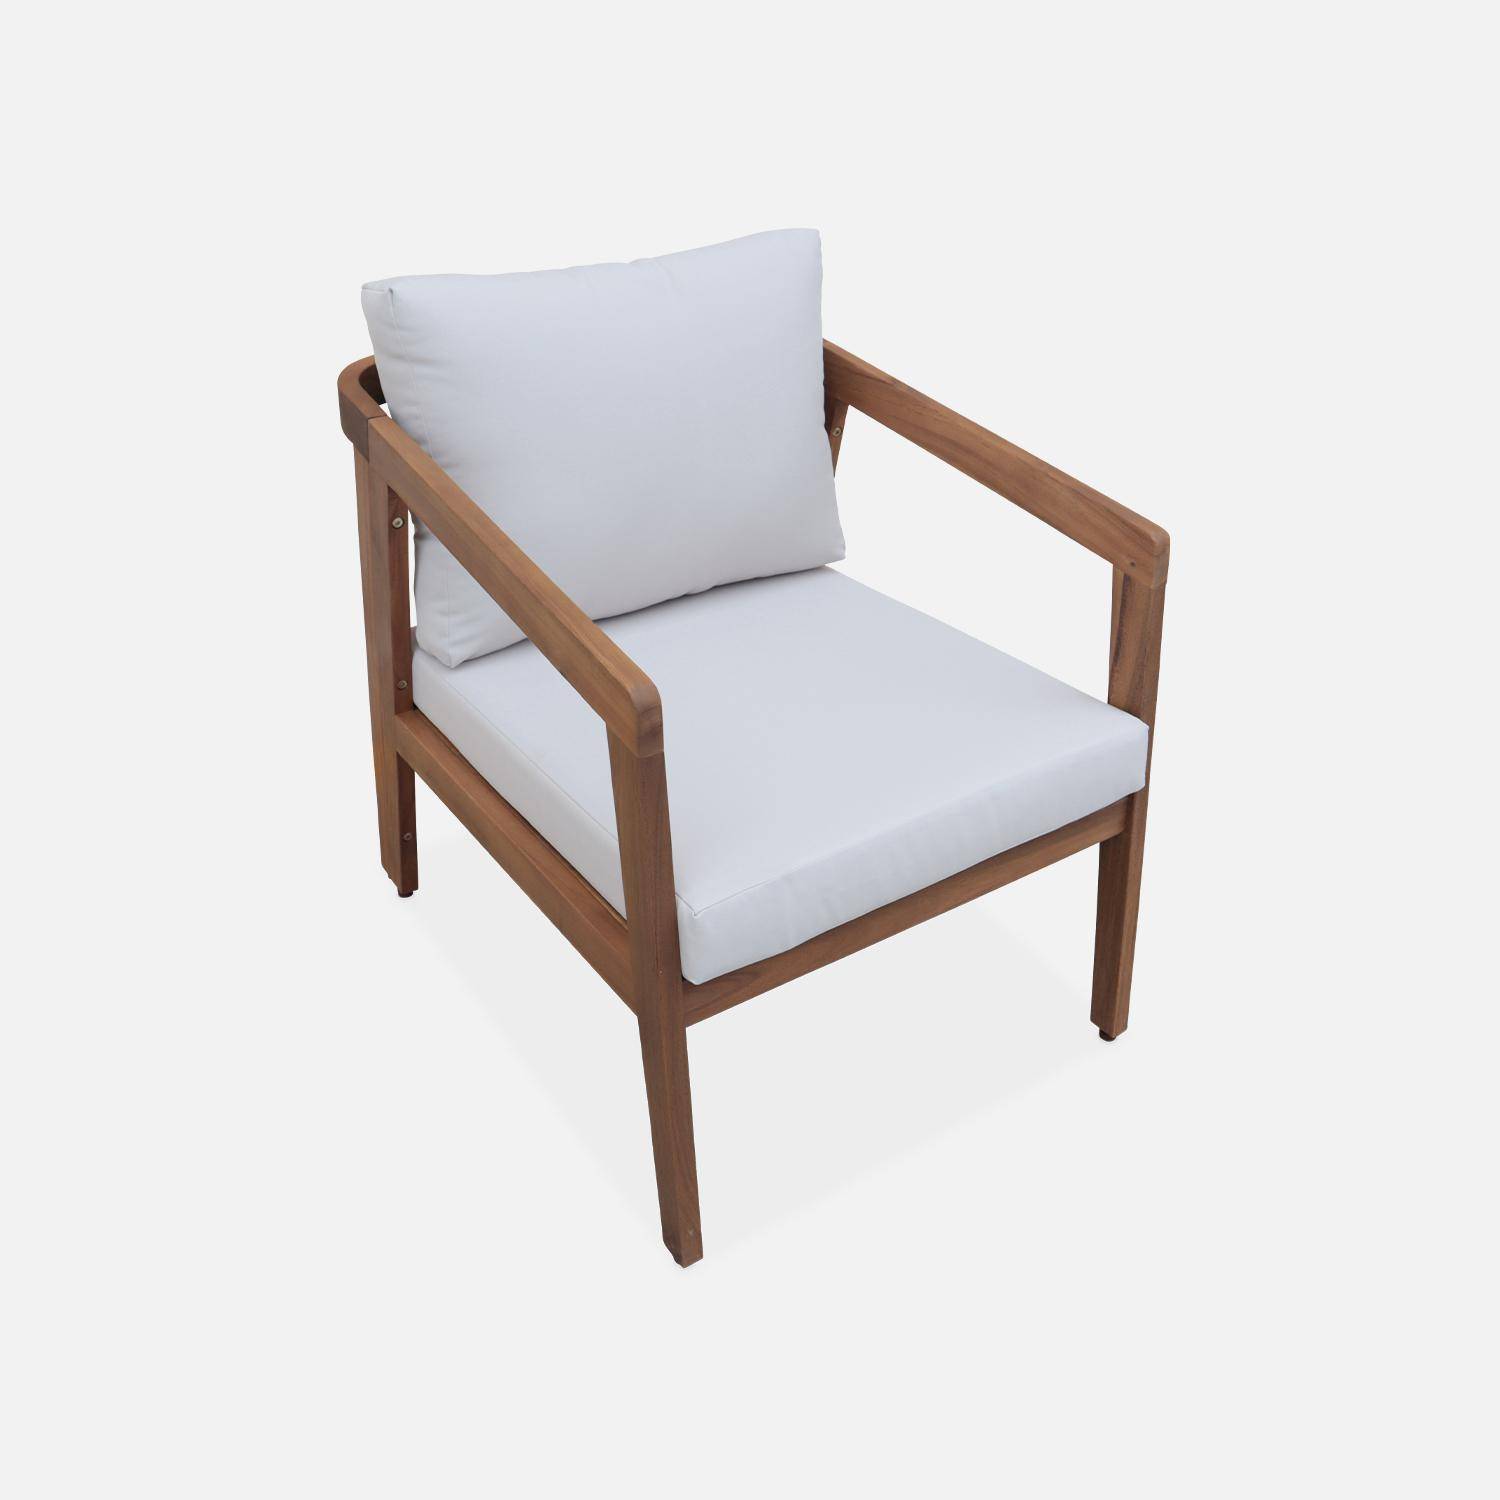 4-seater wooden garden sofa set, beige, natural acacia, 108.5 x 74.7 x 64.5cm Photo6